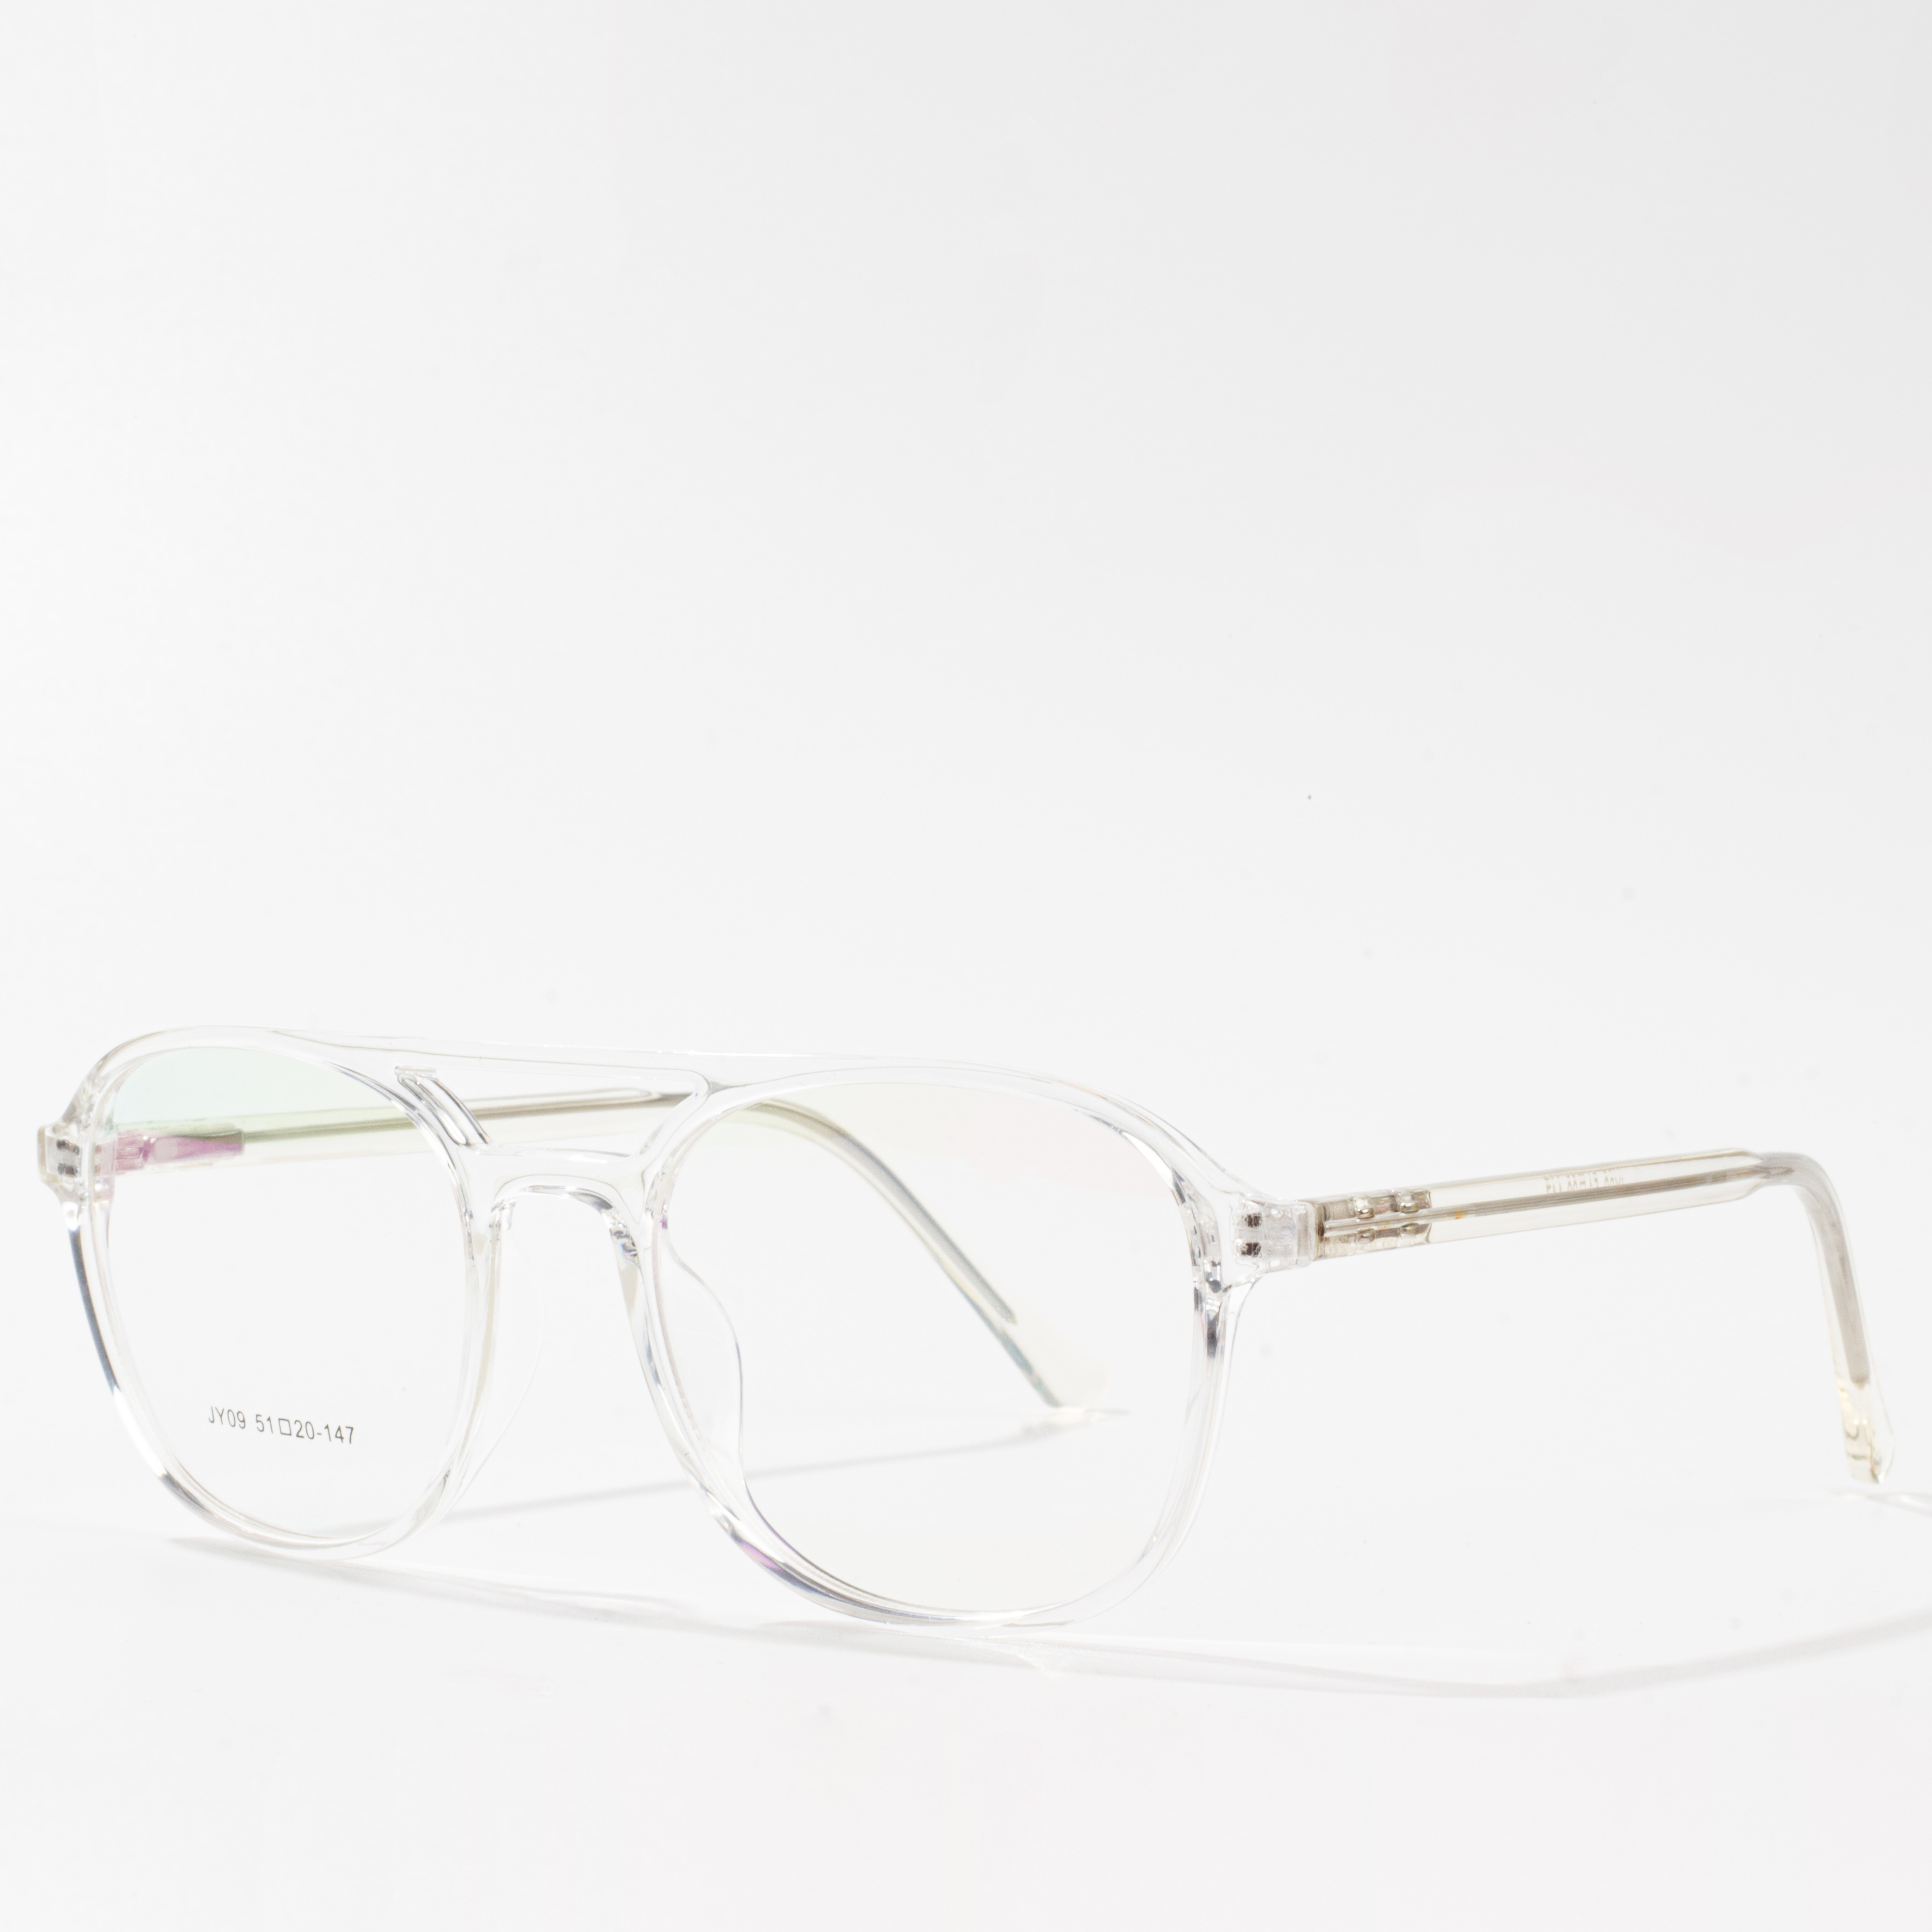 multi colored eyeglass frames